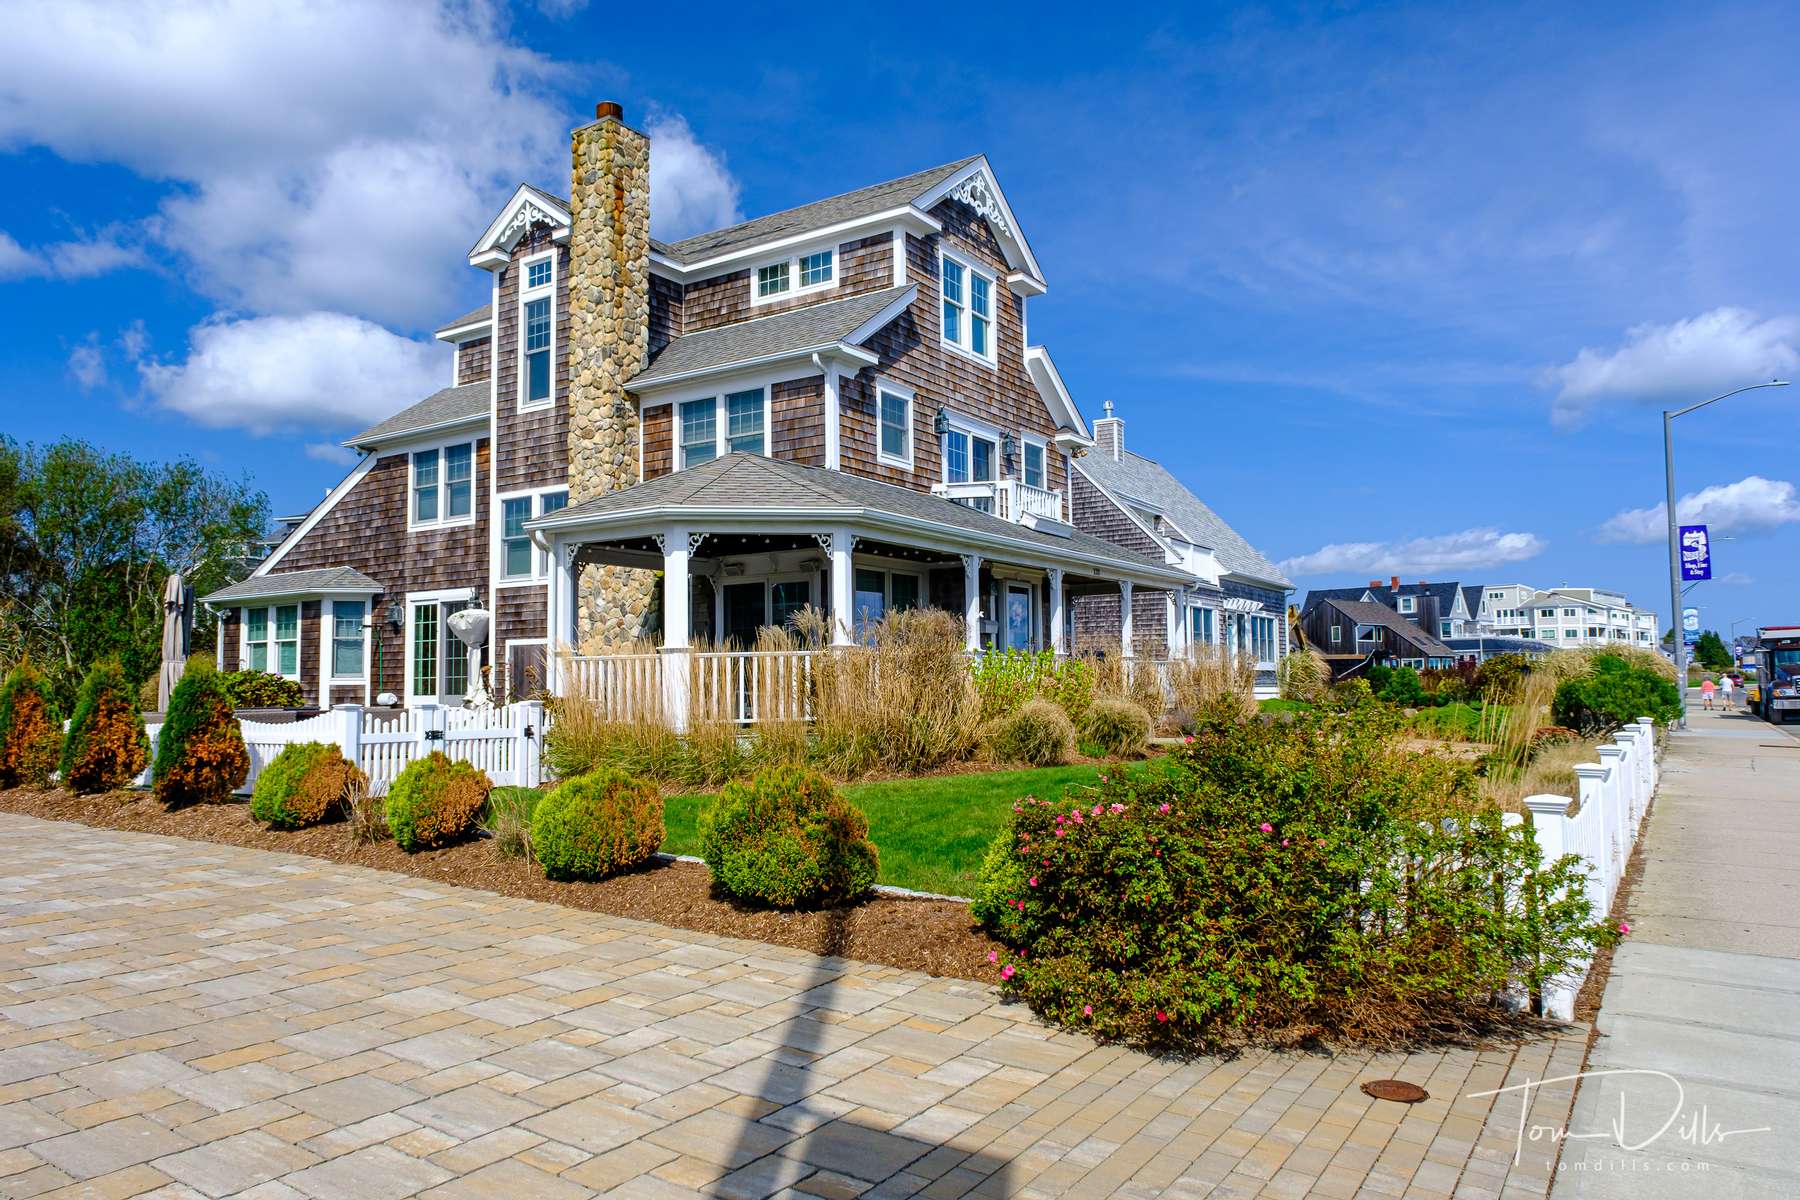 Waterfront homes along Ocean Road in Narragansett, Rhode Island